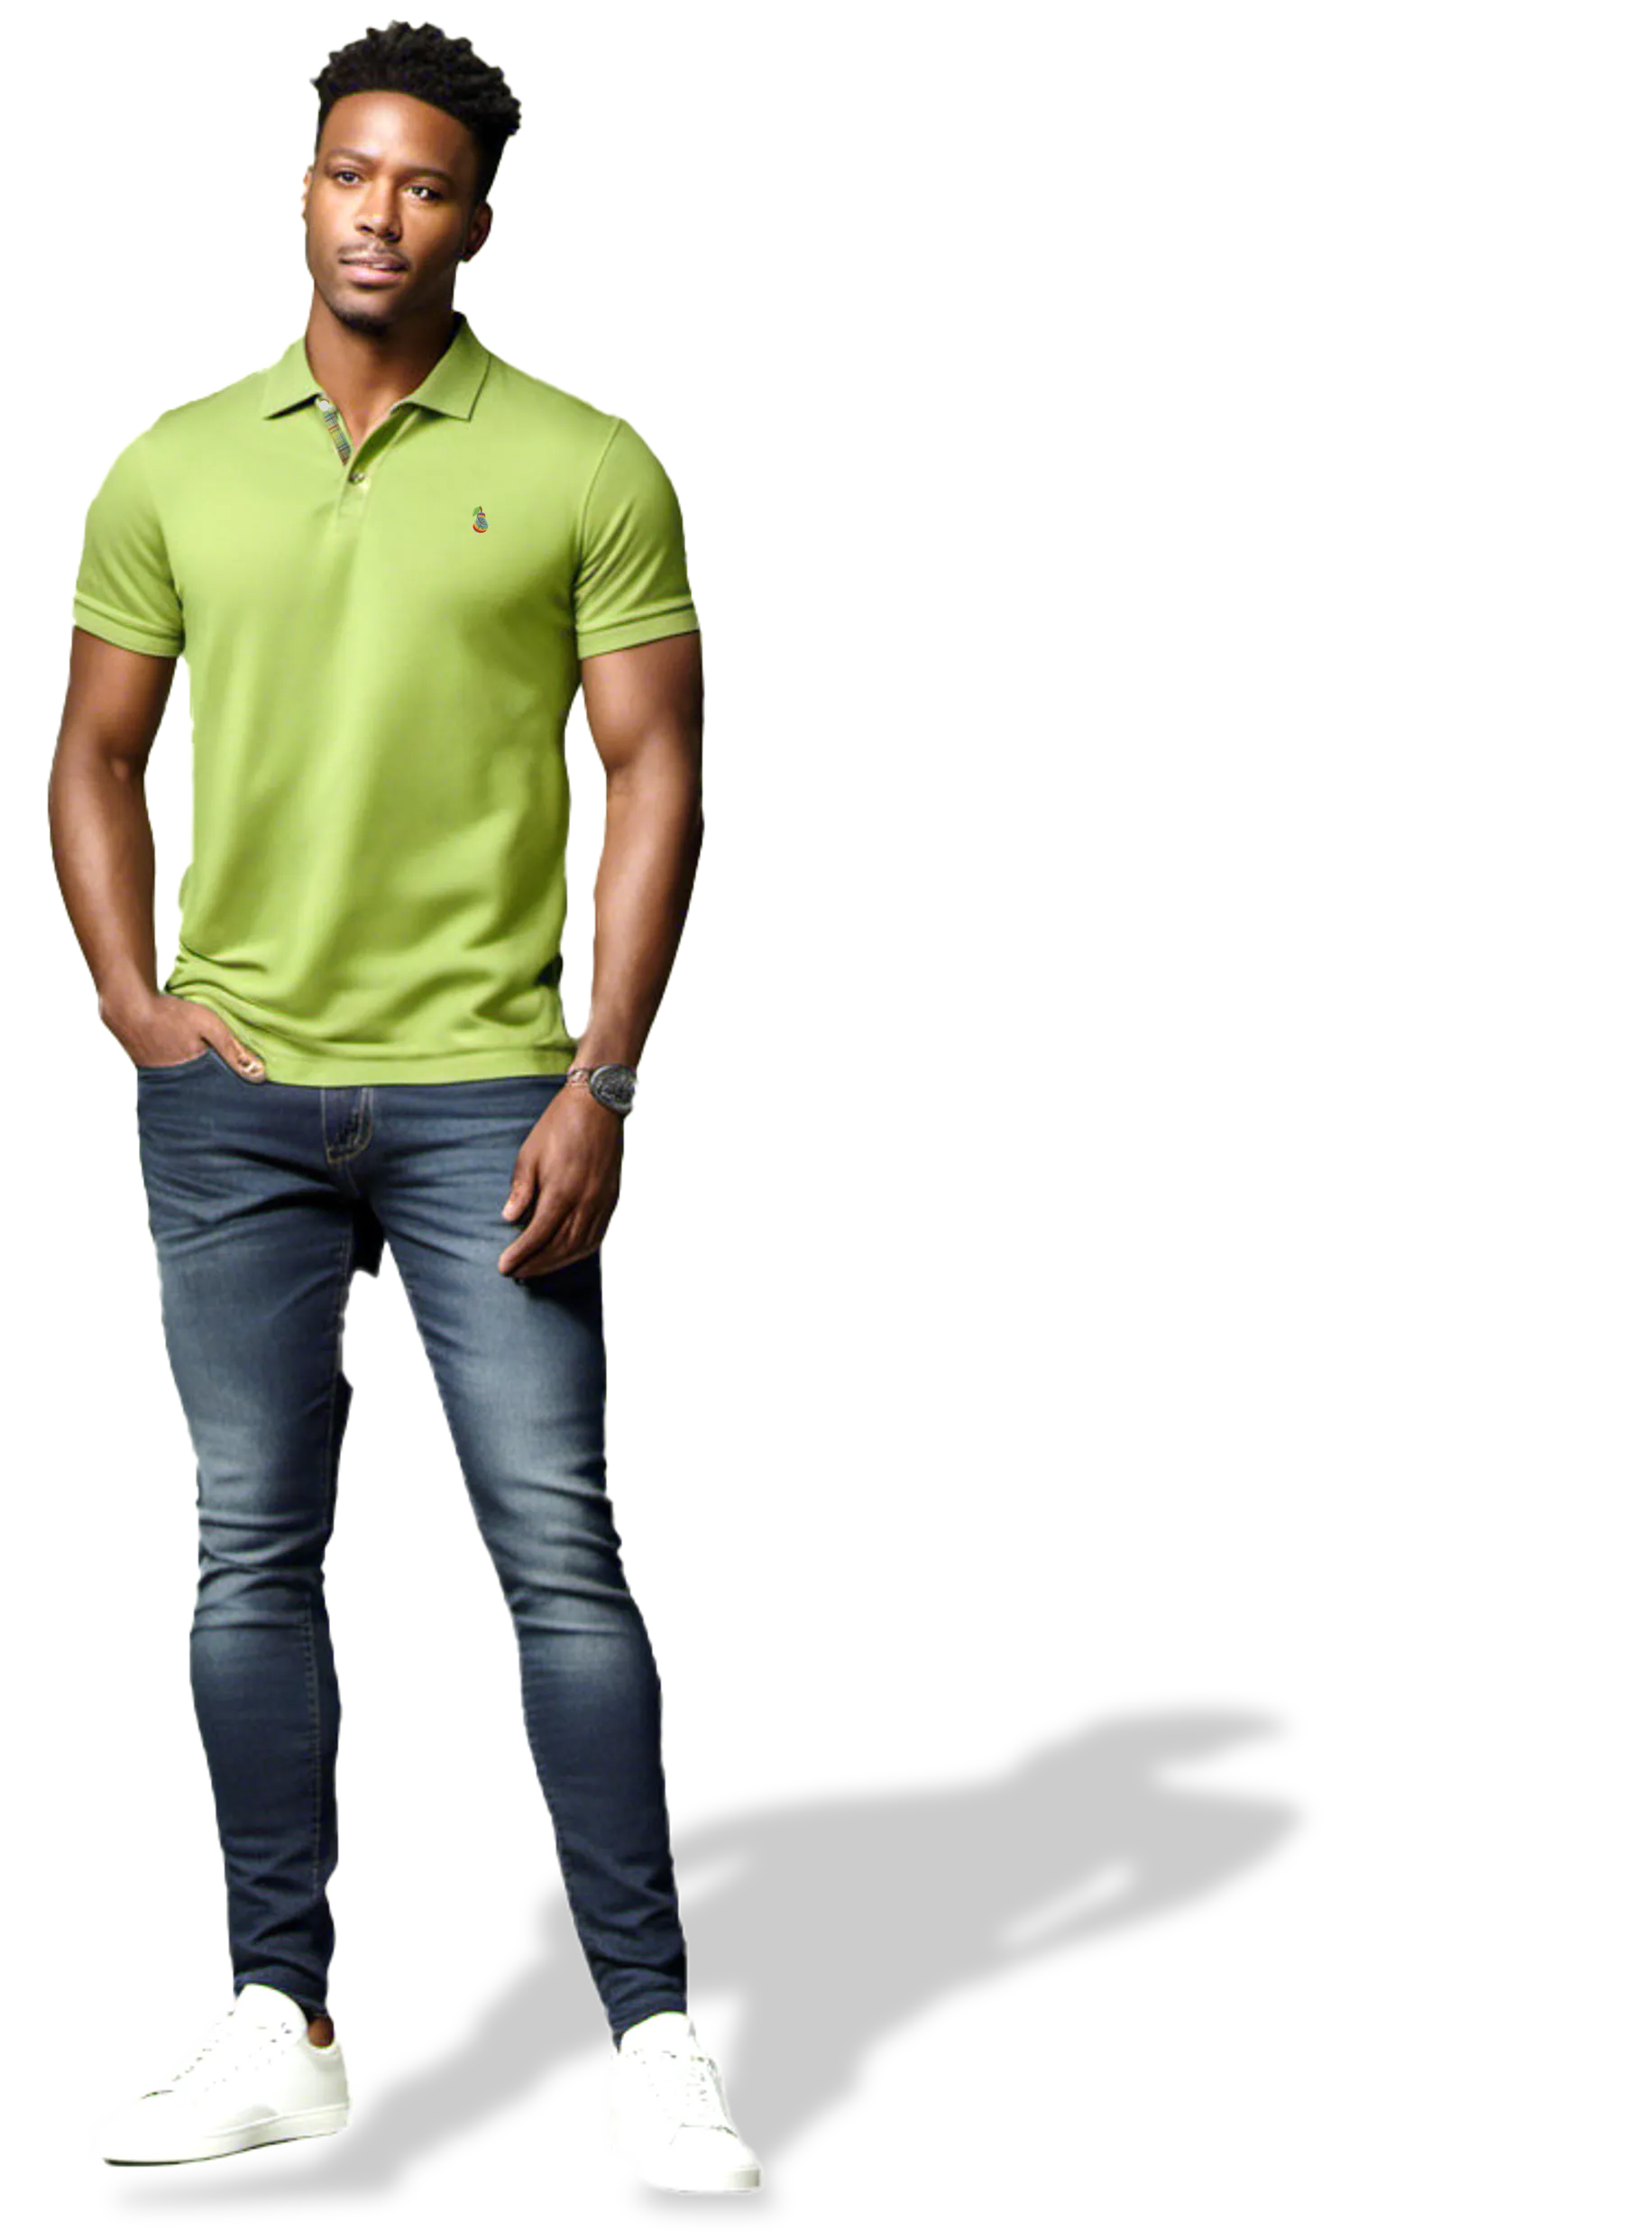 Tom Pearman Avocado Green Short Sleave Polo Shirt